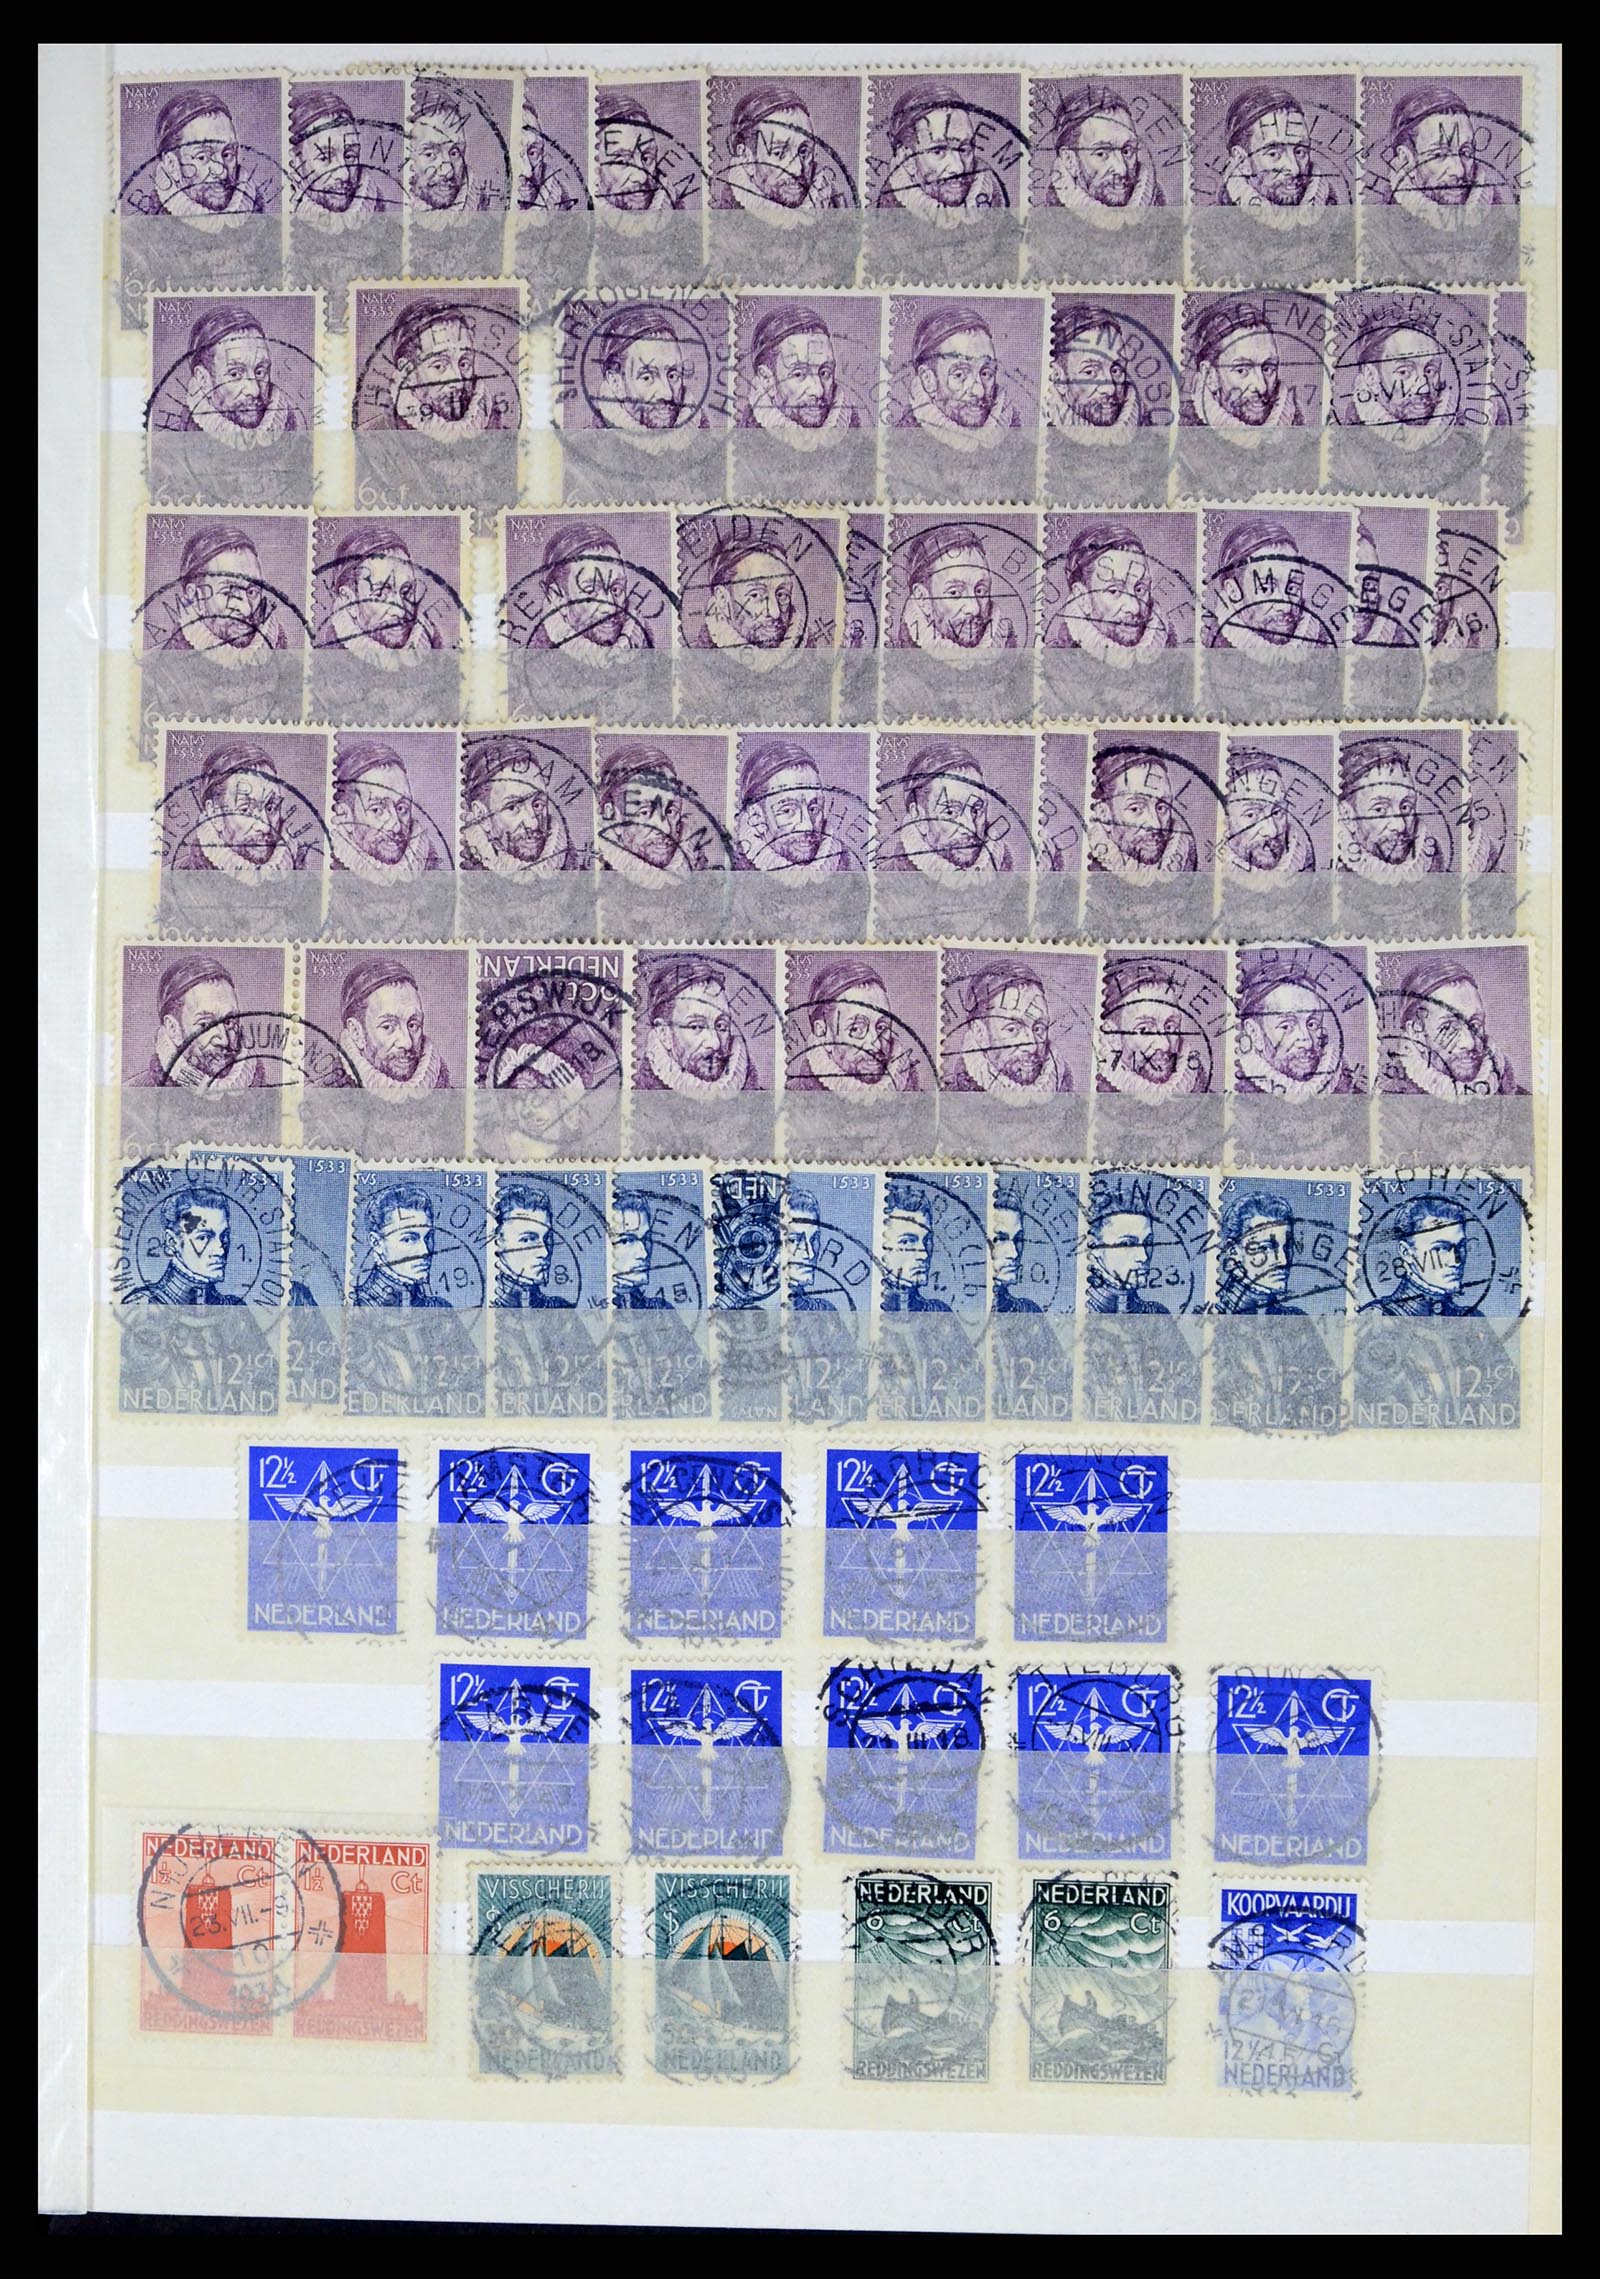 37424 017 - Stamp collection 37424 Netherlands shortbar cancels.